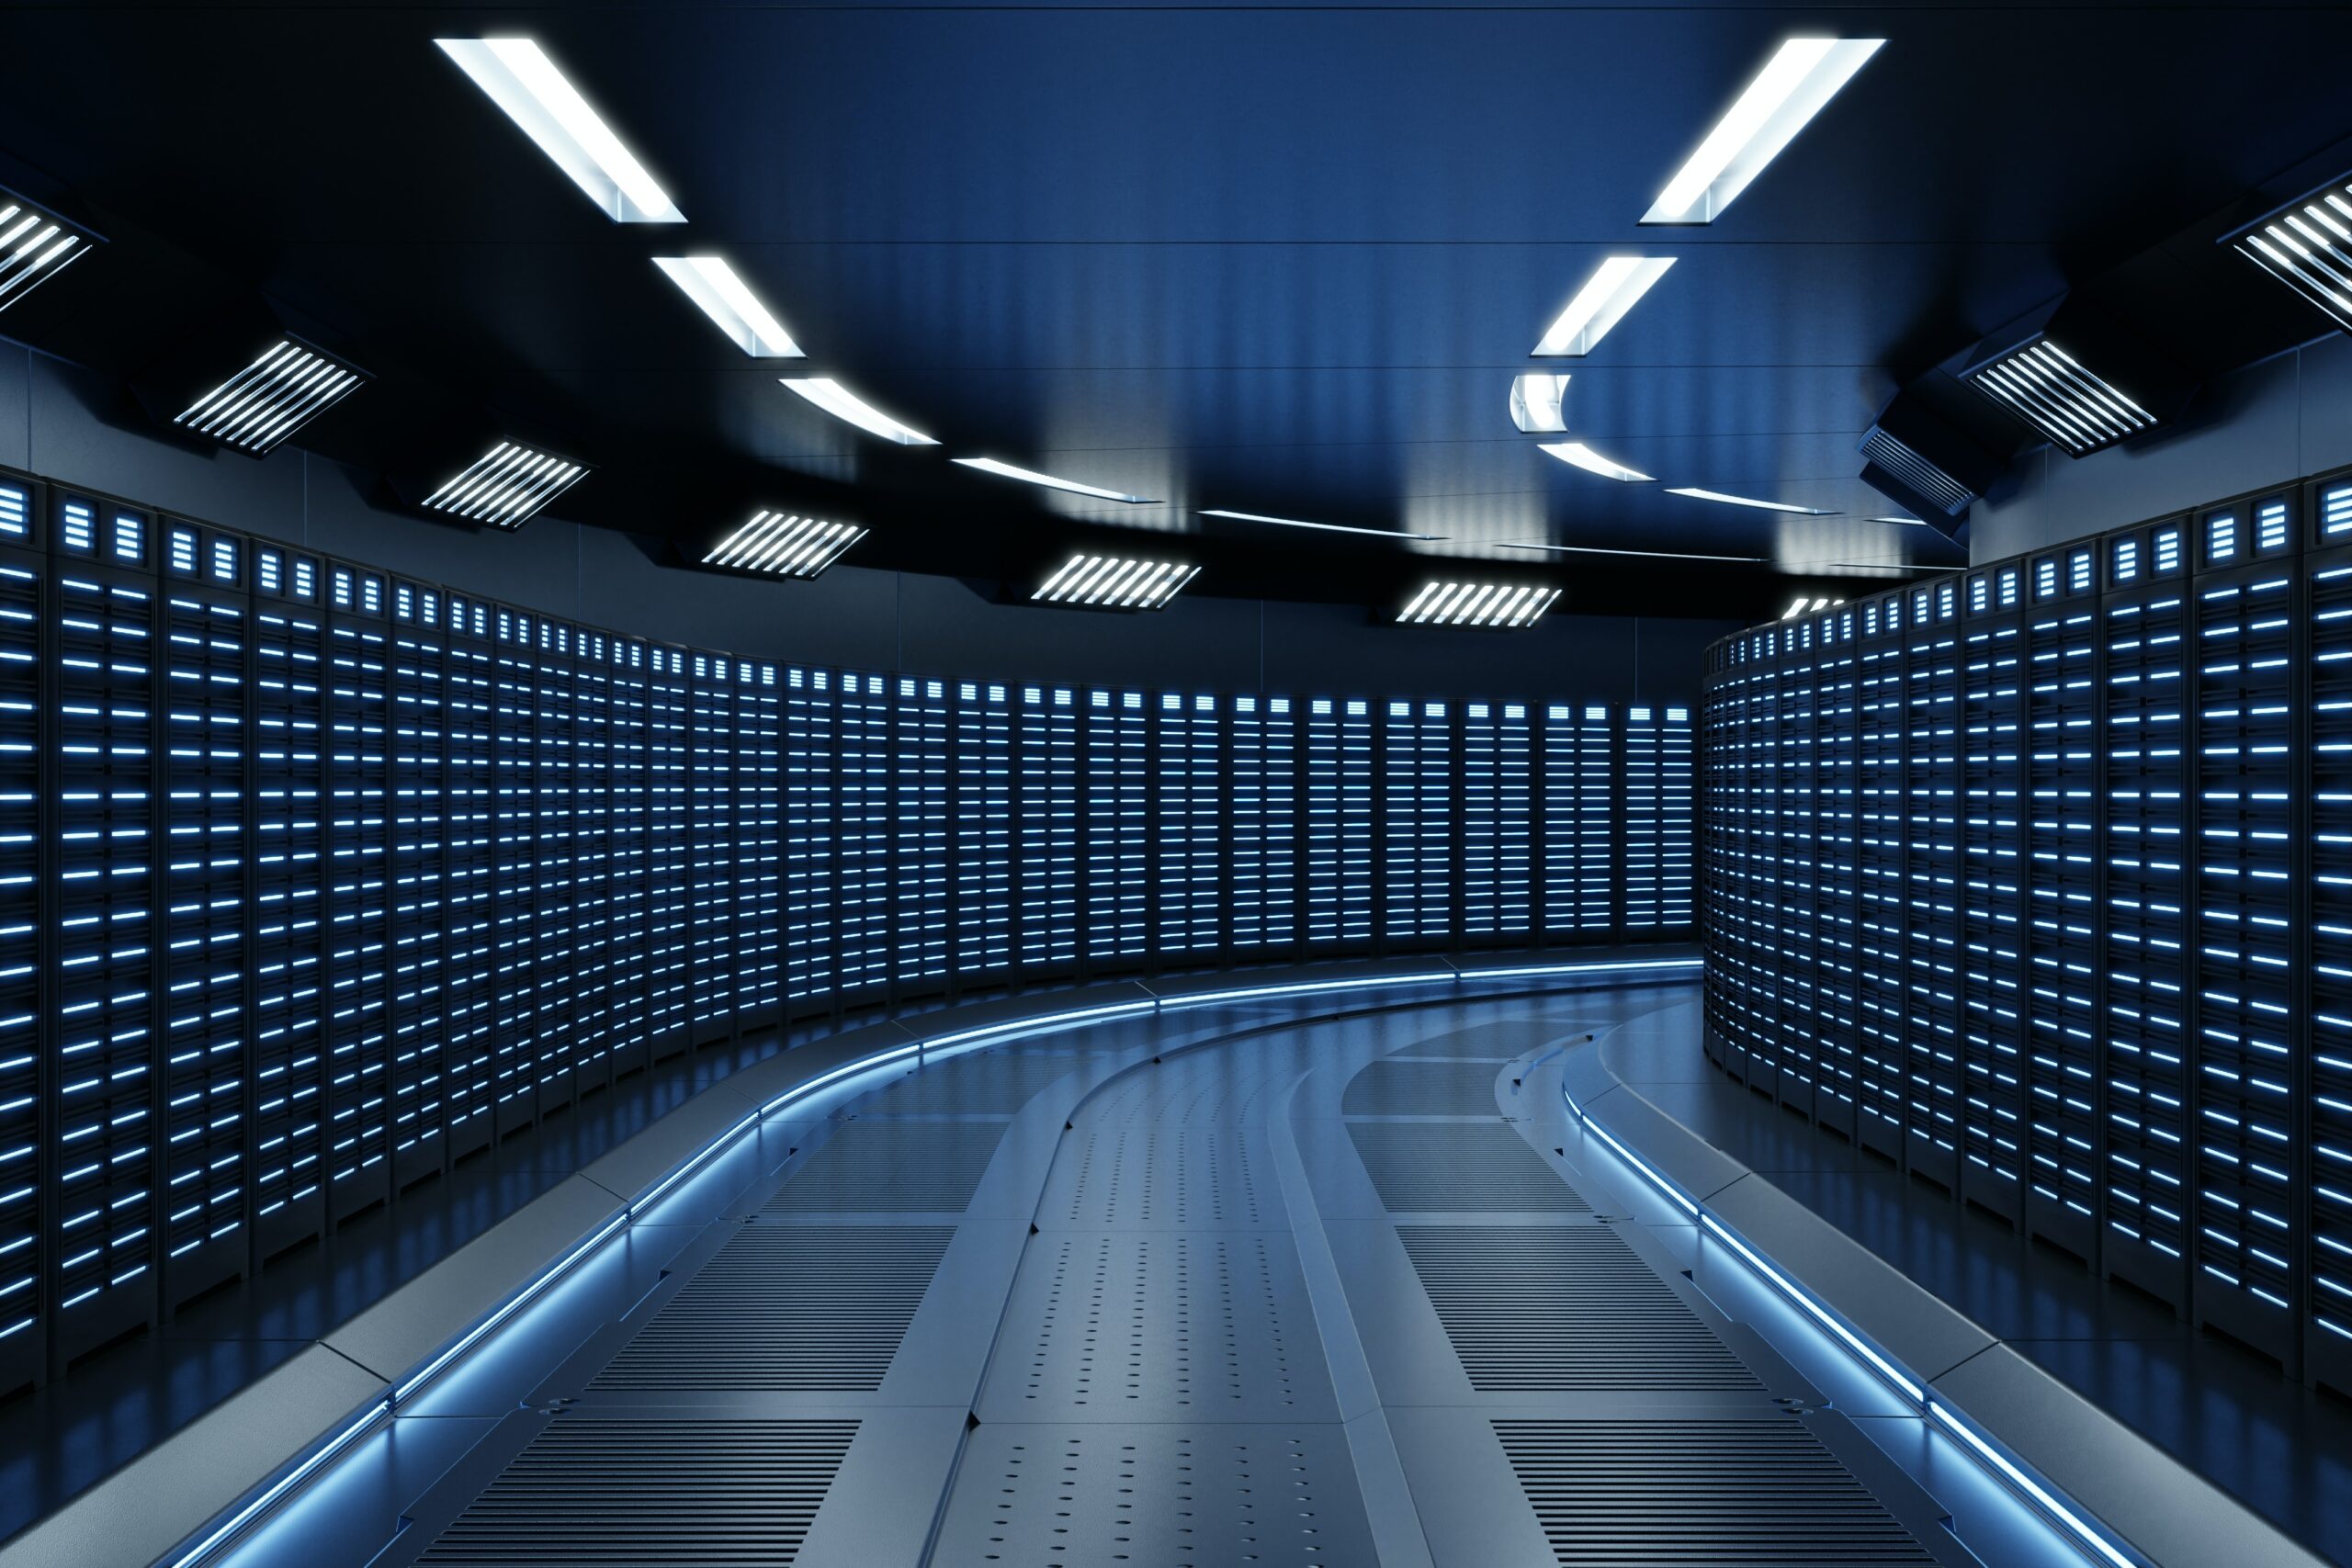 A futuristic image of a data center highlighting cloud storage.